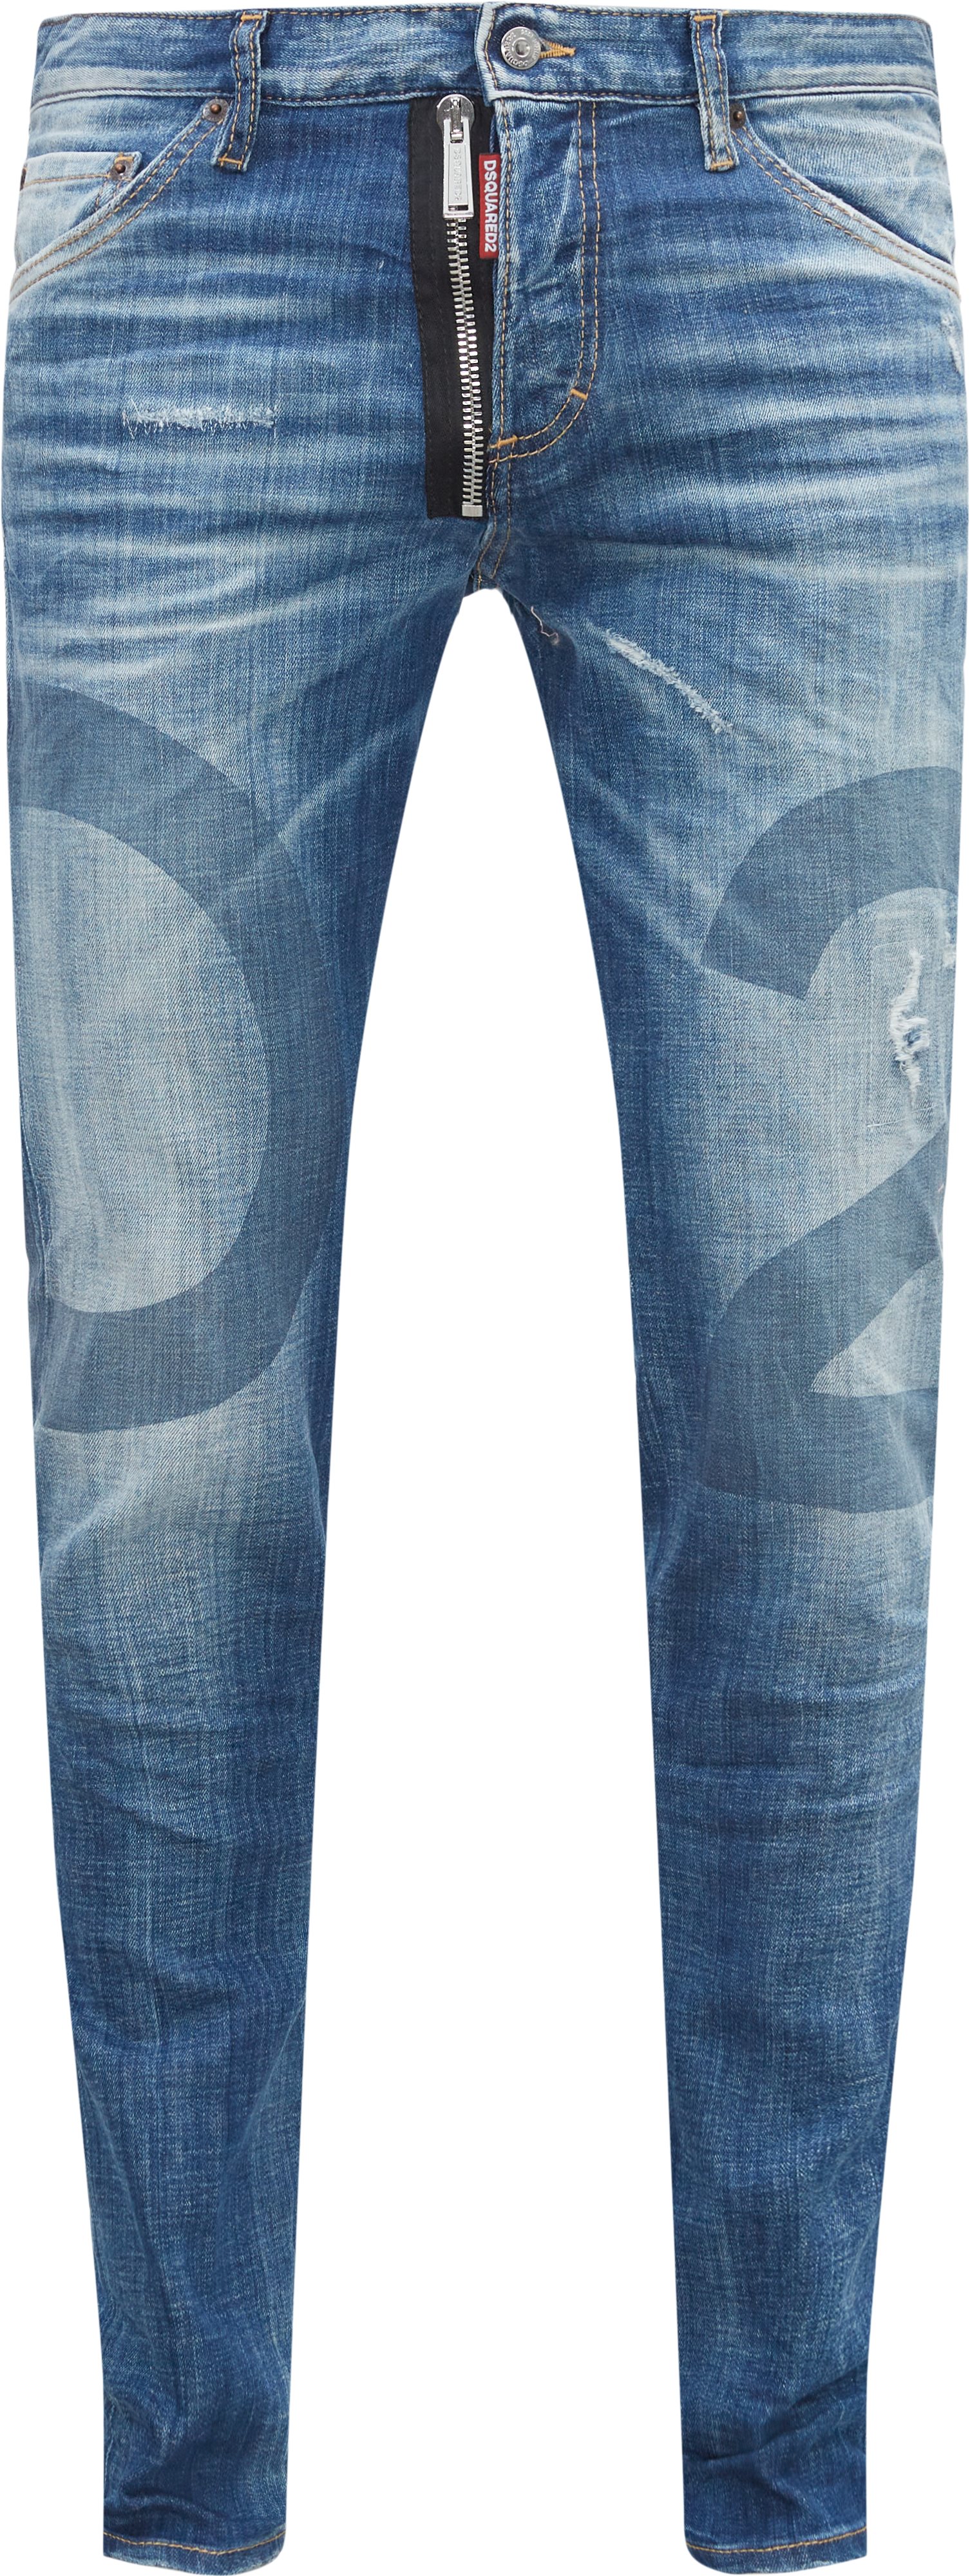 Cool Guy Jeans - Jeans - Slim fit - Denim